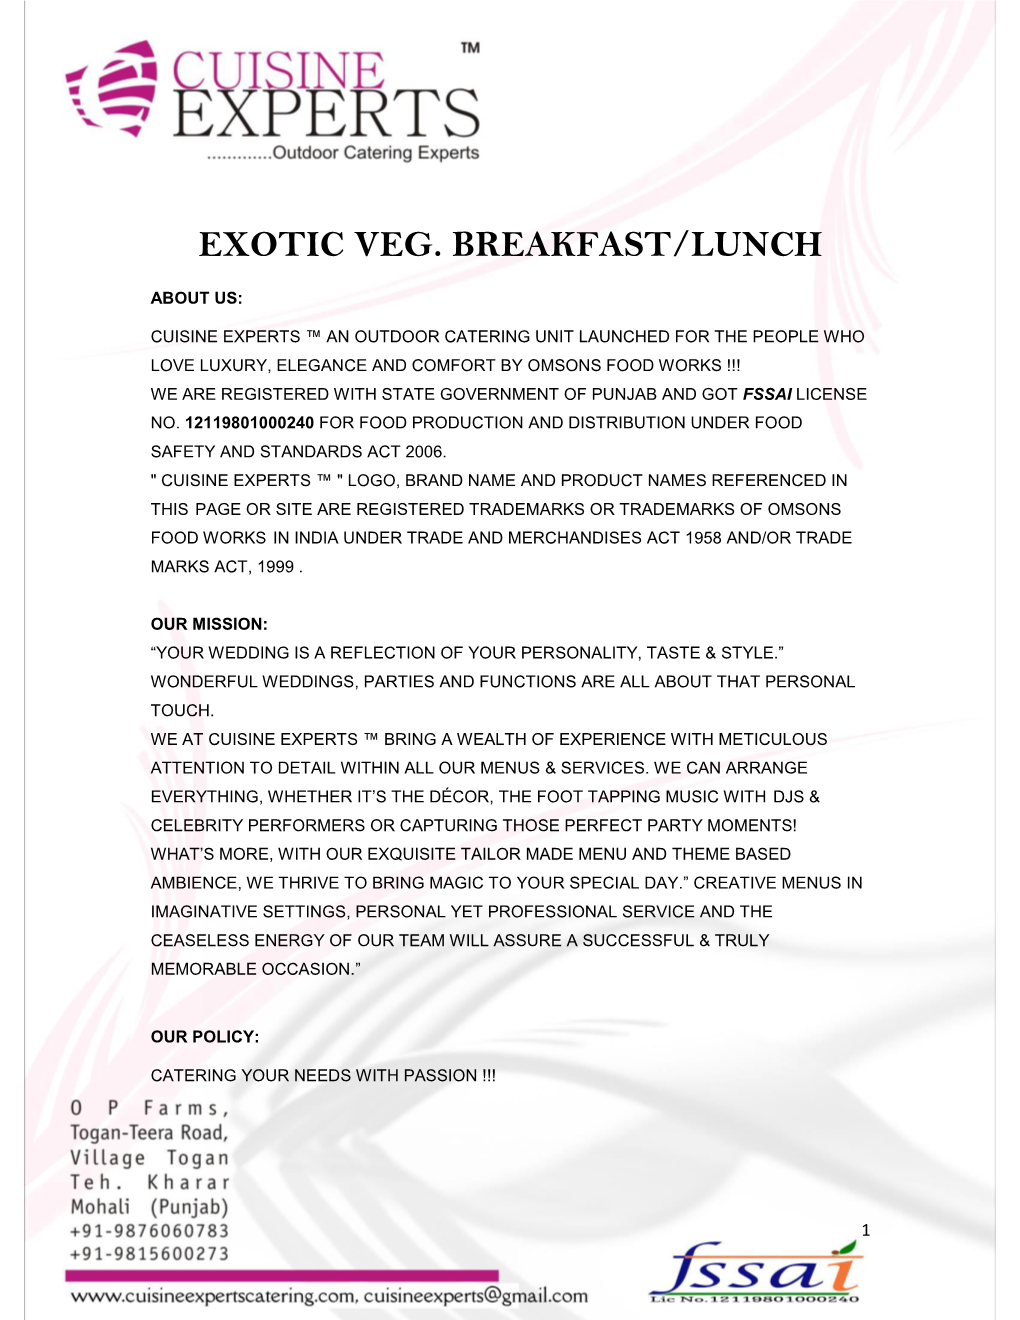 Exotic Veg. Breakfast/Lunch